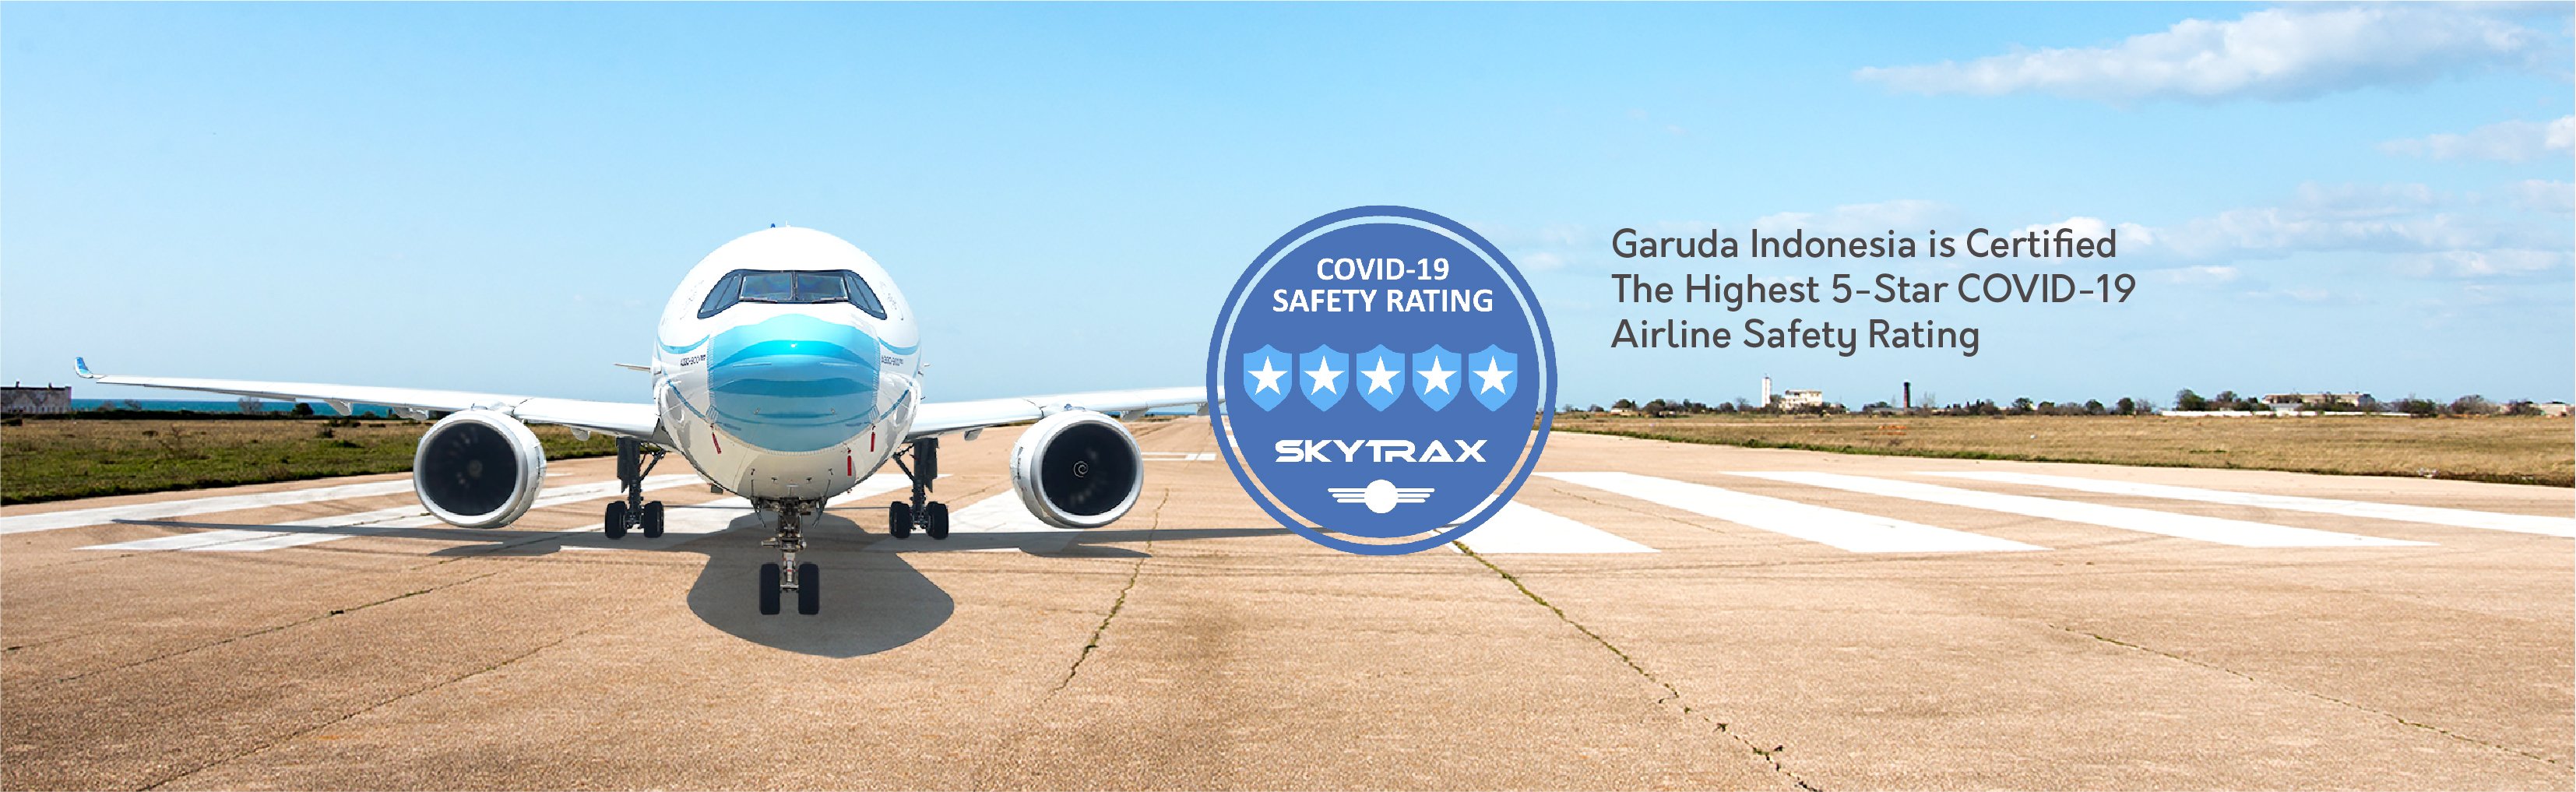 GARUDA INDONESIA RAIH PREDIKAT “5-STAR COVID-19 AIRLINE SAFETY RATING” DARI SKYTRAX